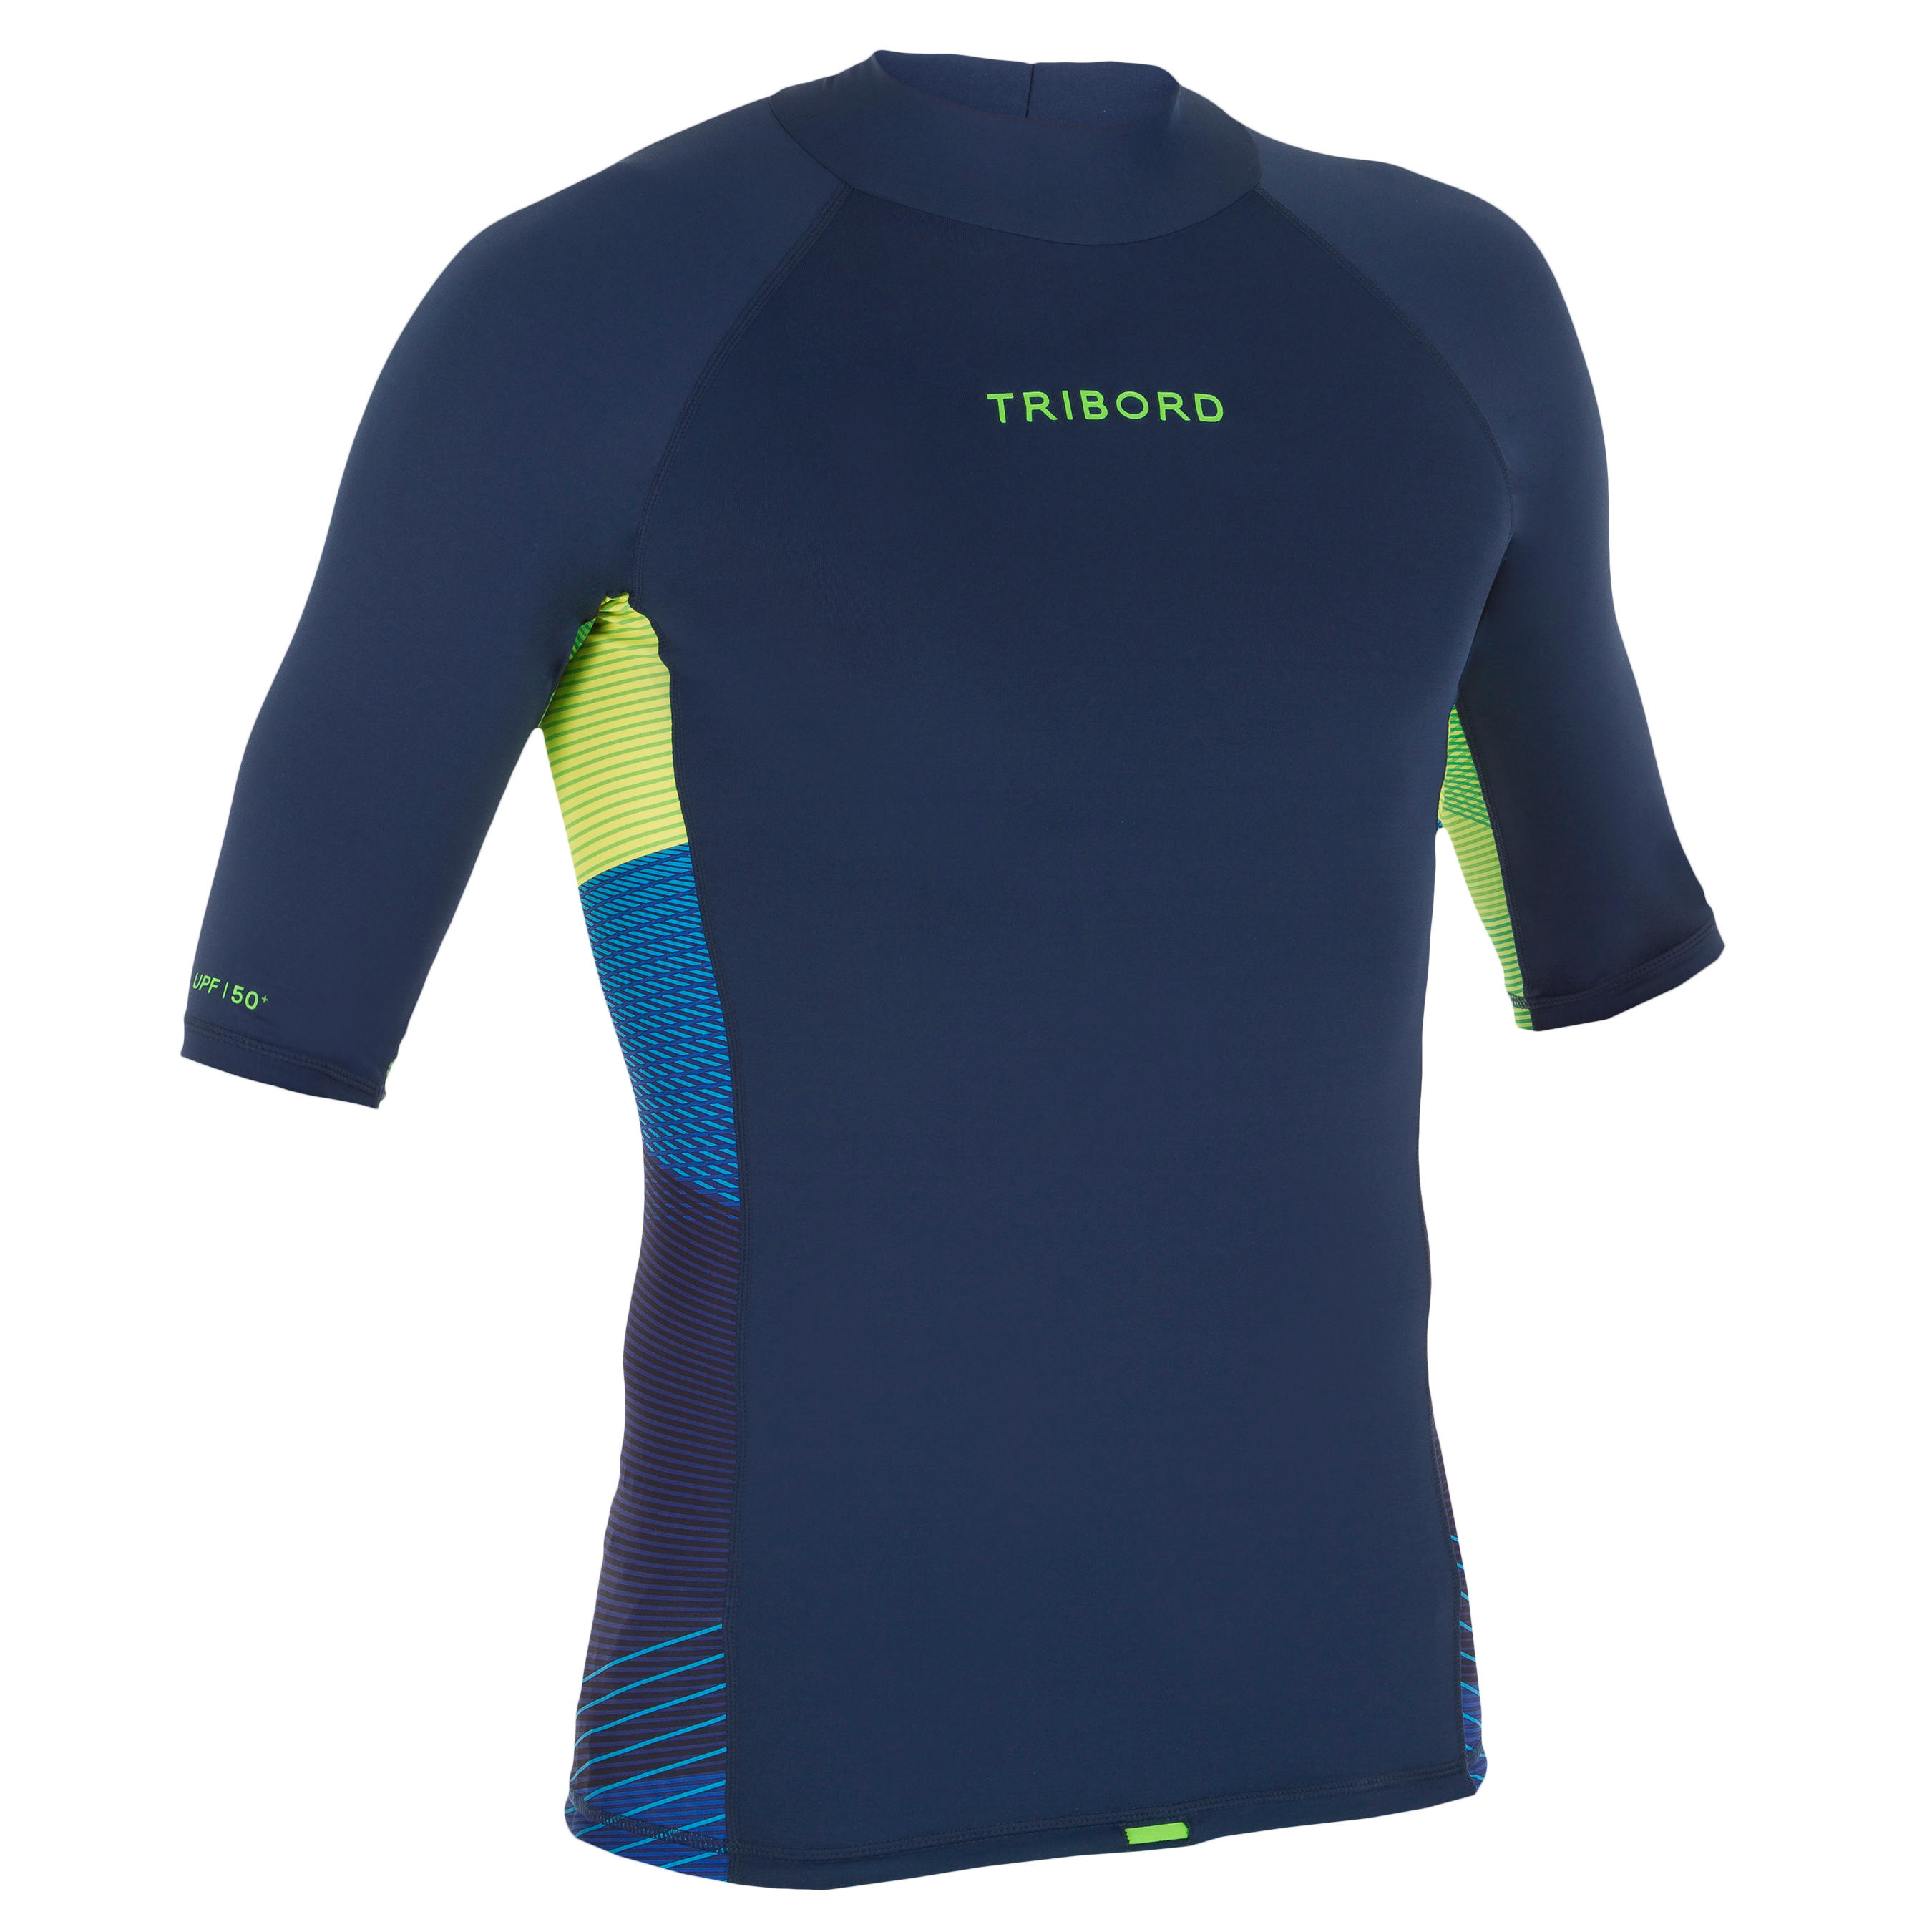 TRIBORD 500 Men's Short Sleeve UV Protection Surfing T-Shirt Top - Blue Stripes